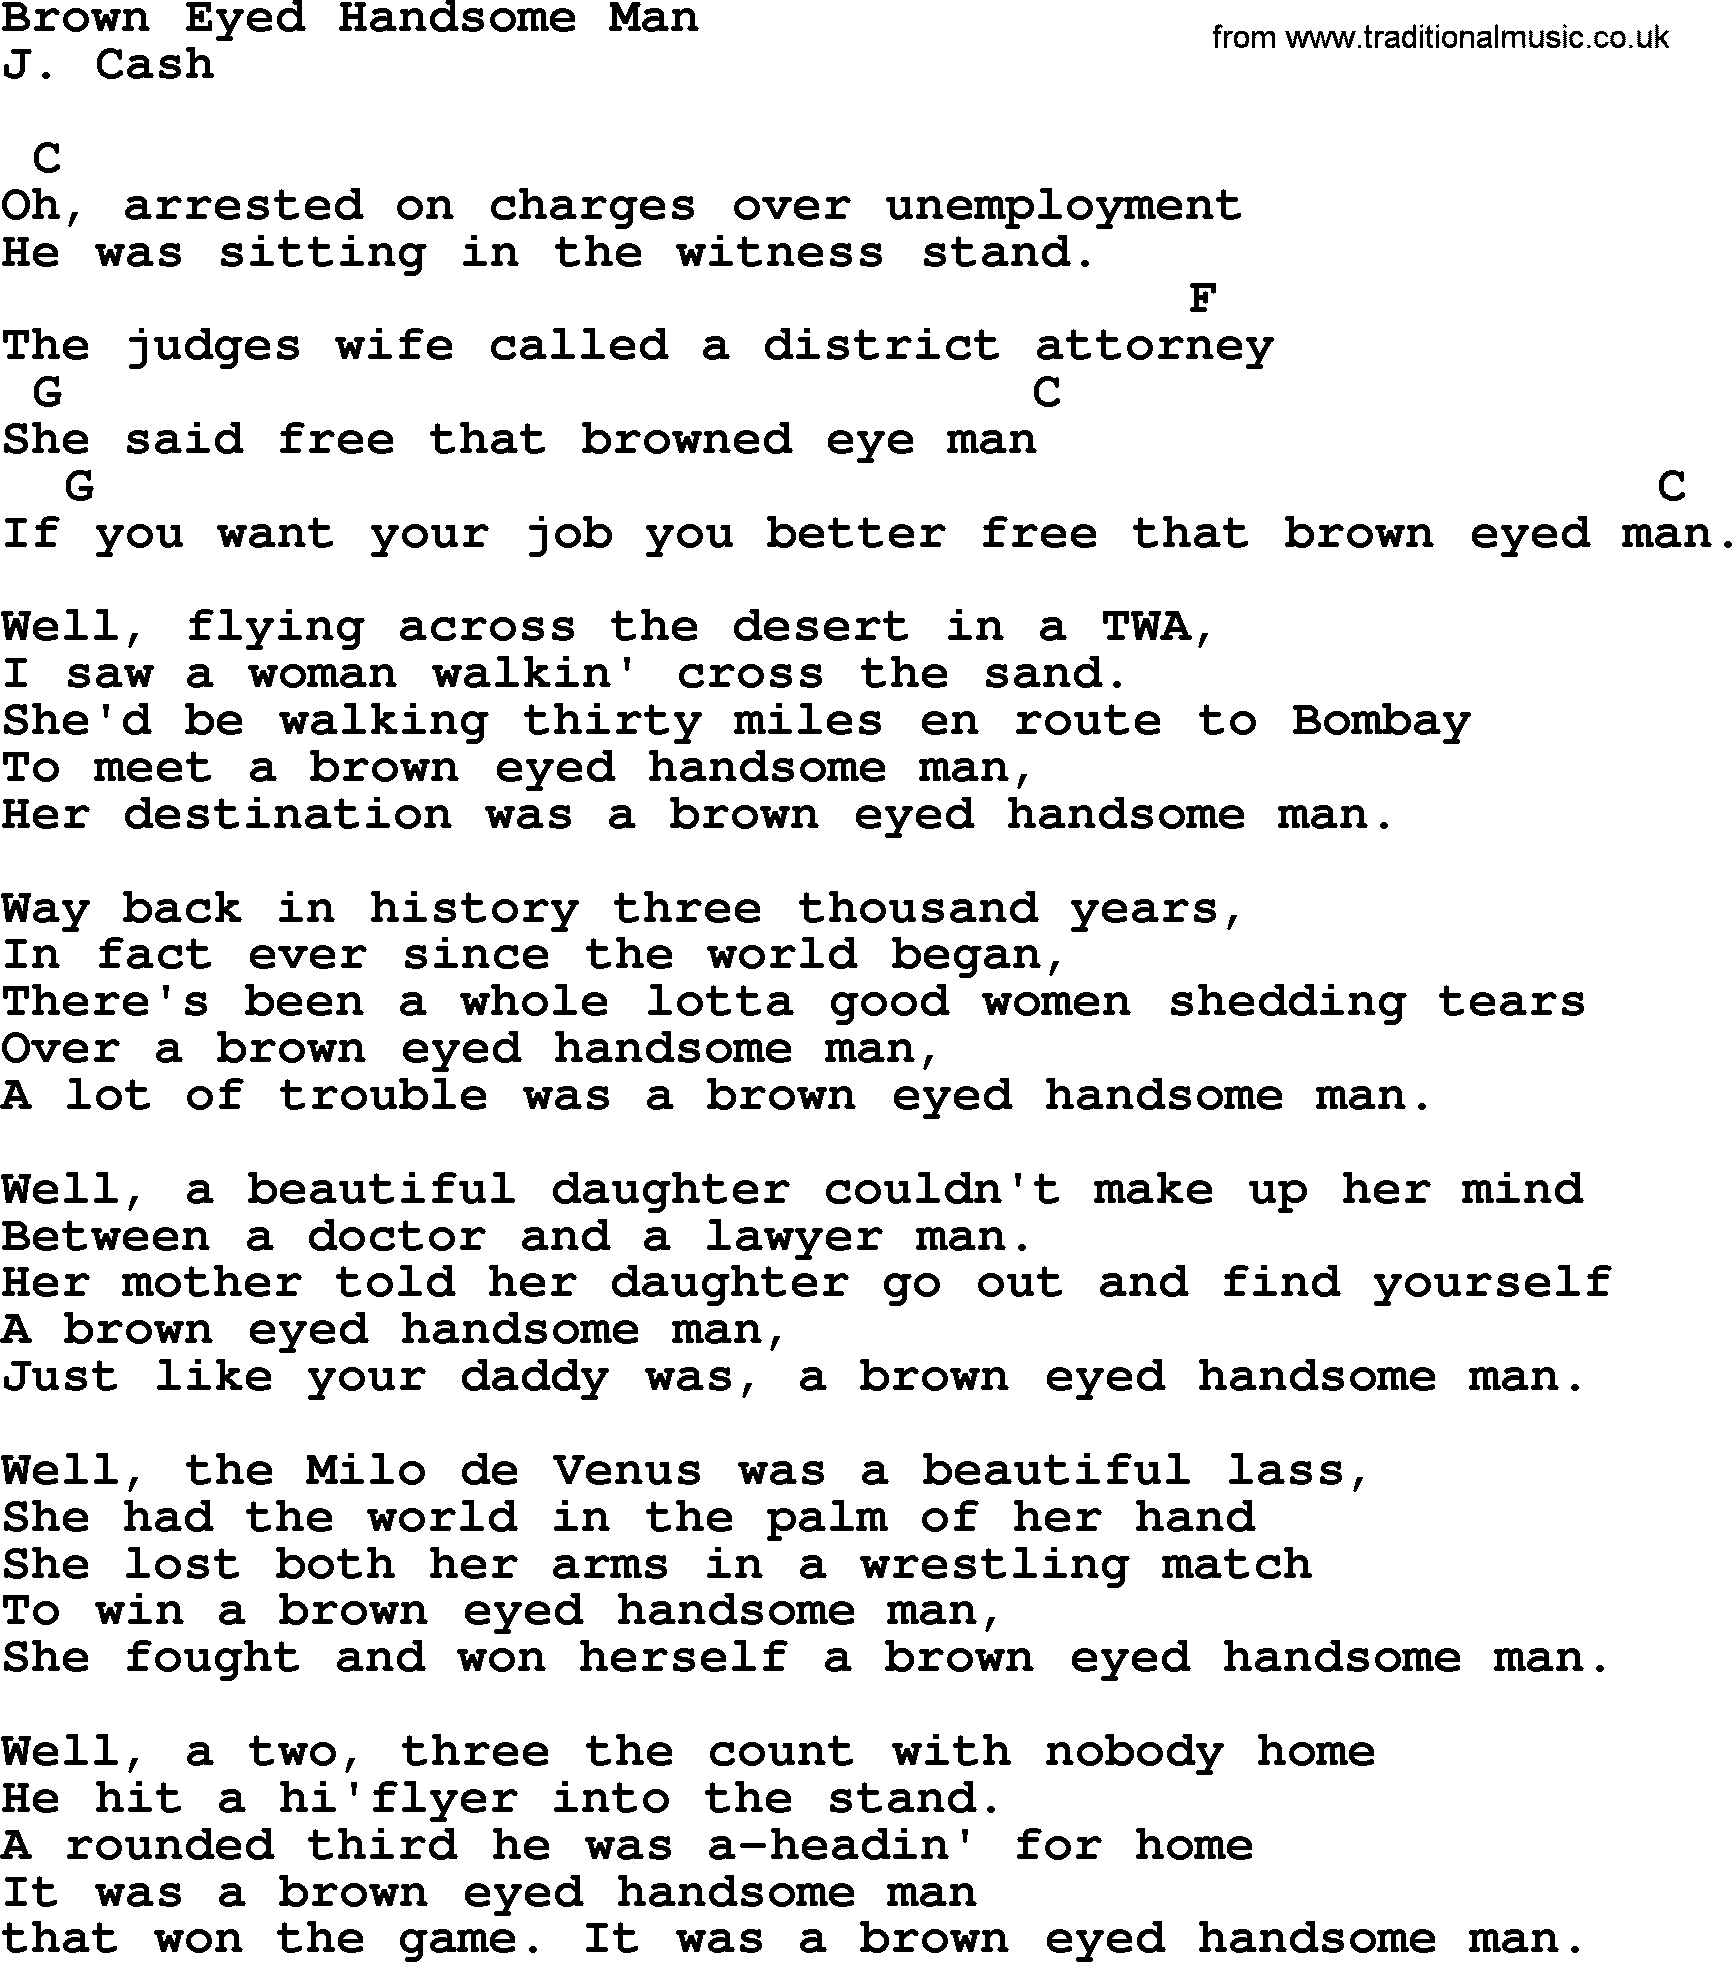 Johnny Cash song Brown Eyed Handsome Man, lyrics and chords